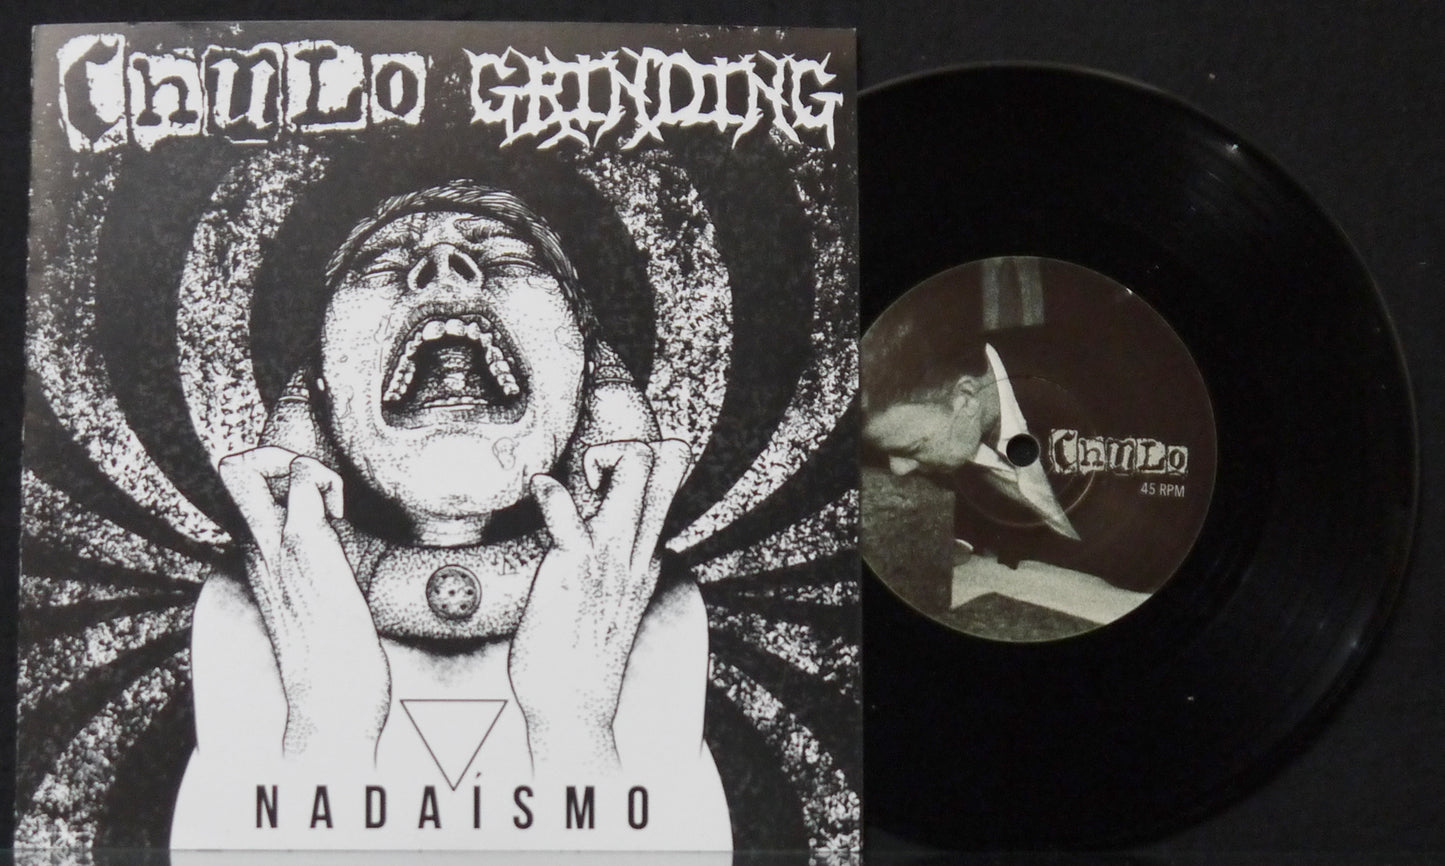 CHULO / GRINDING - Split 7"